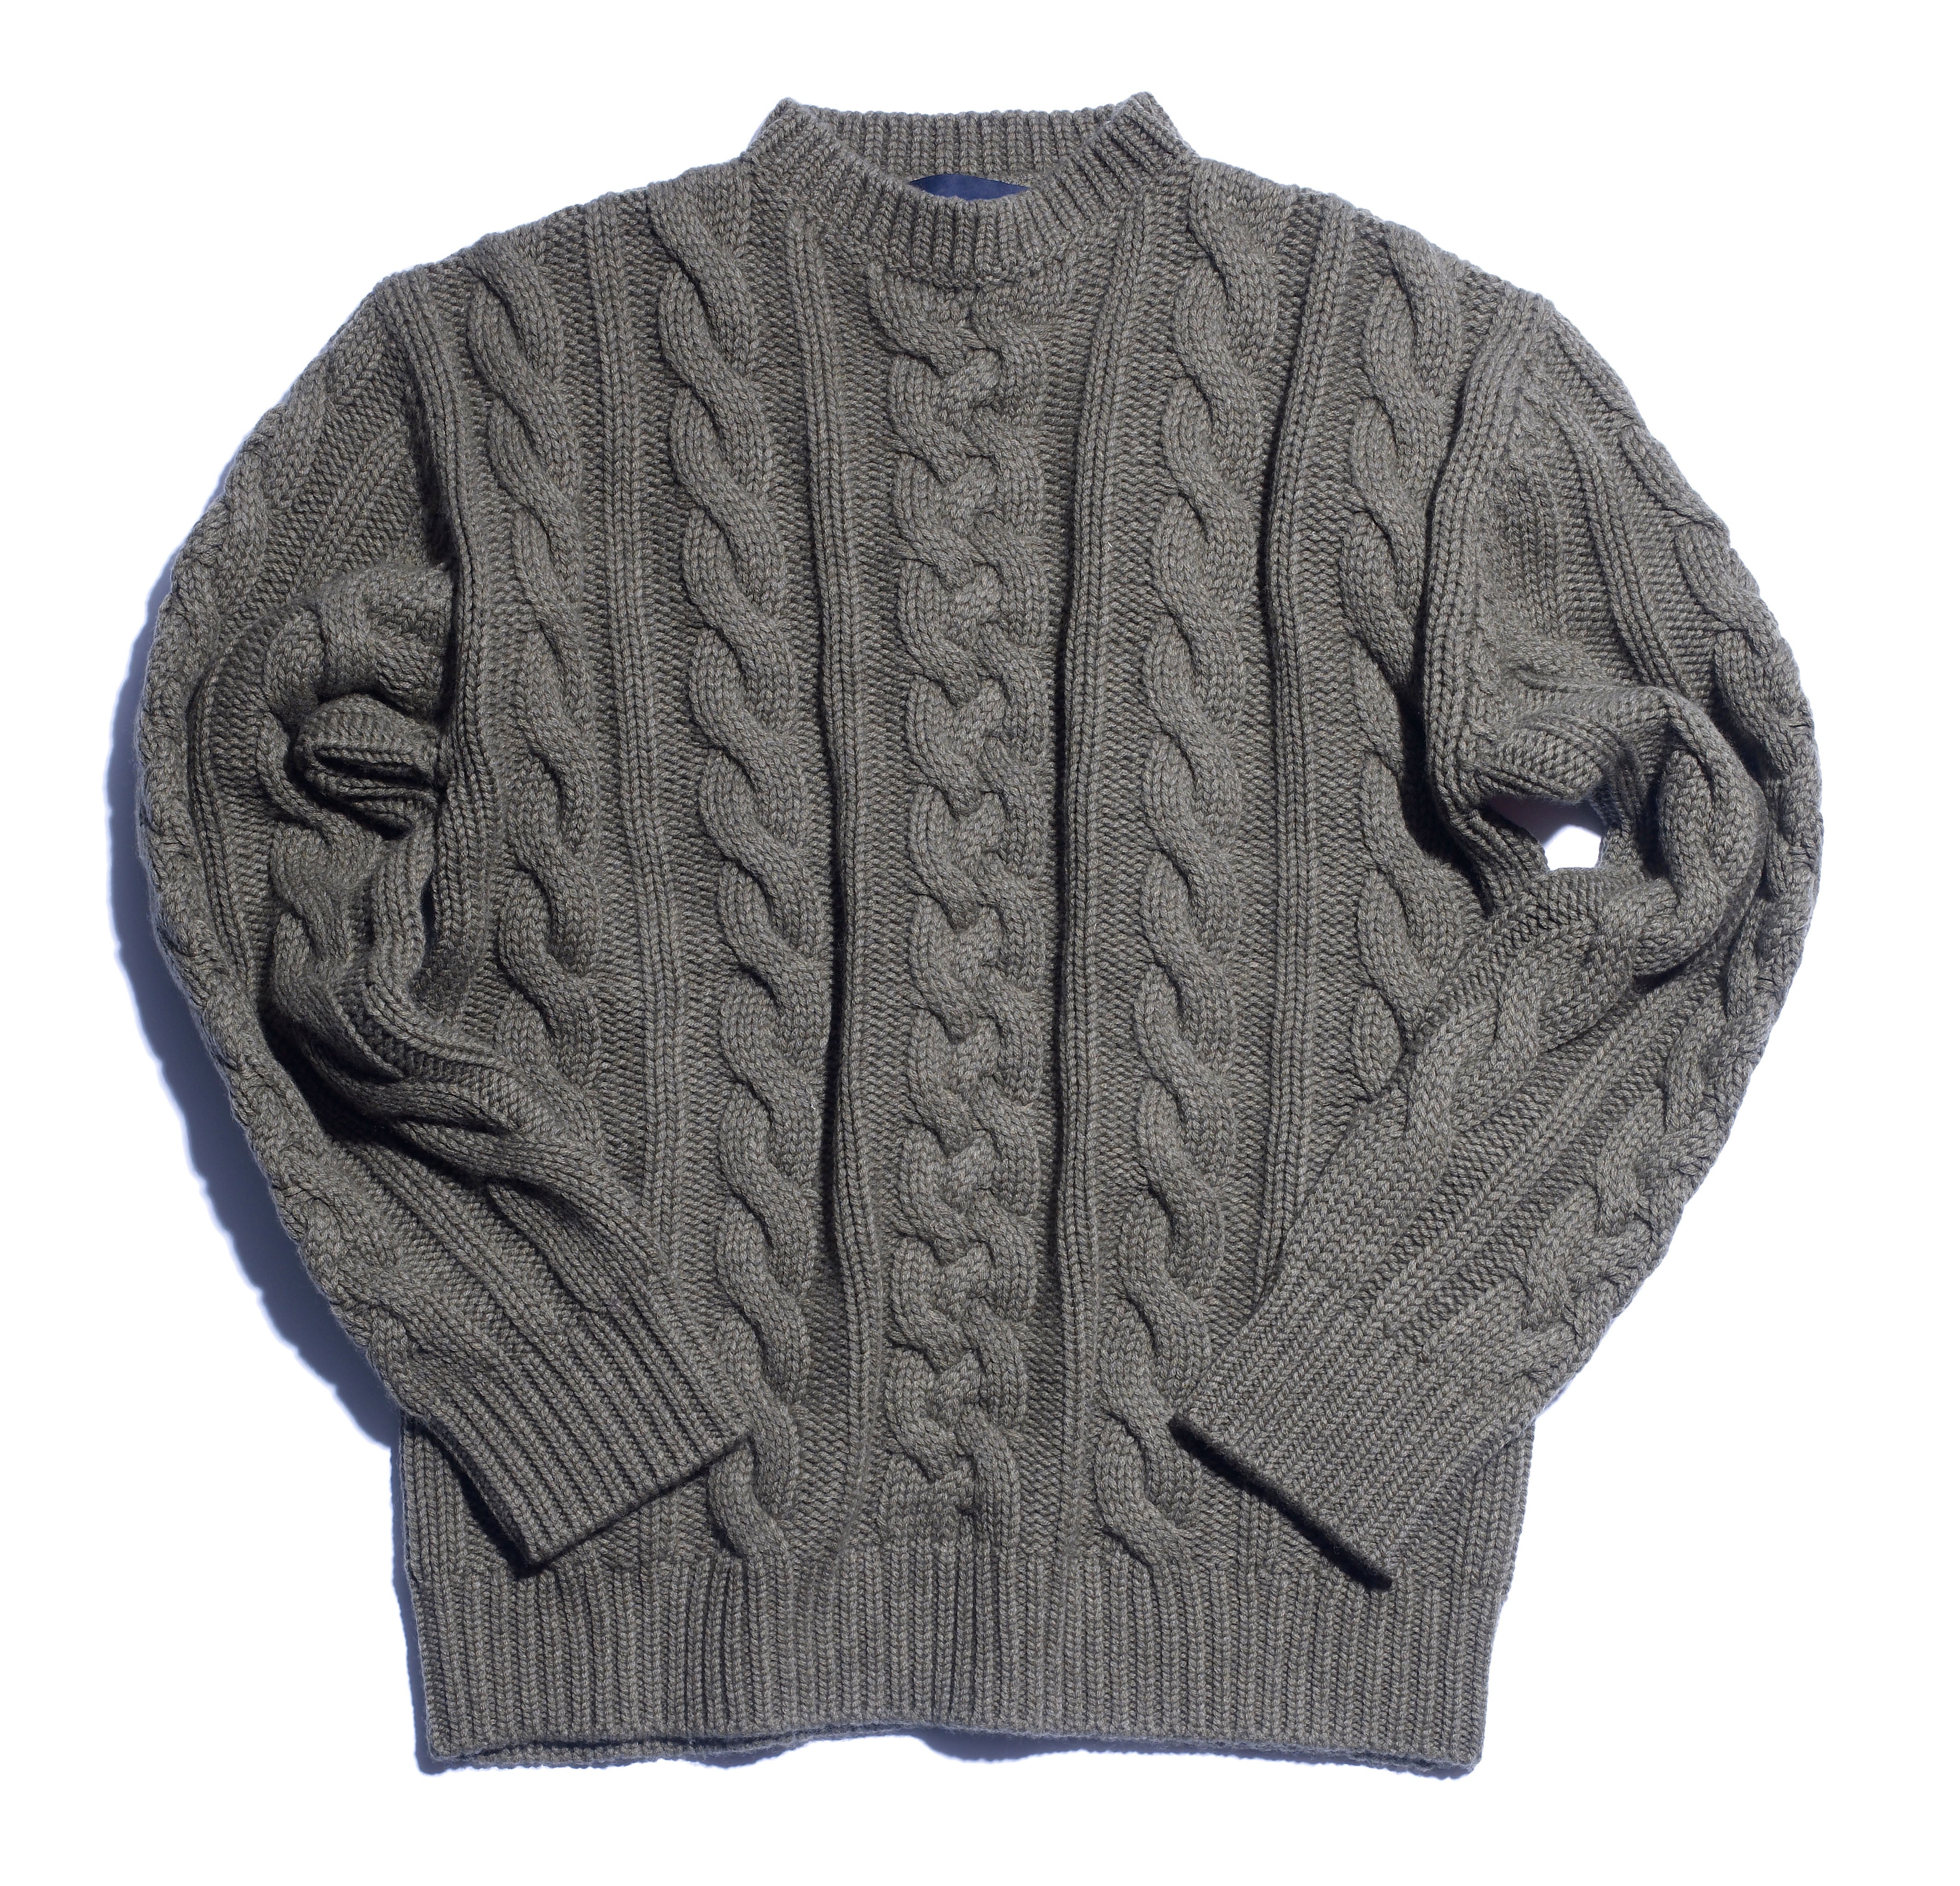 Cable knit woollen Jersey sweater jumper